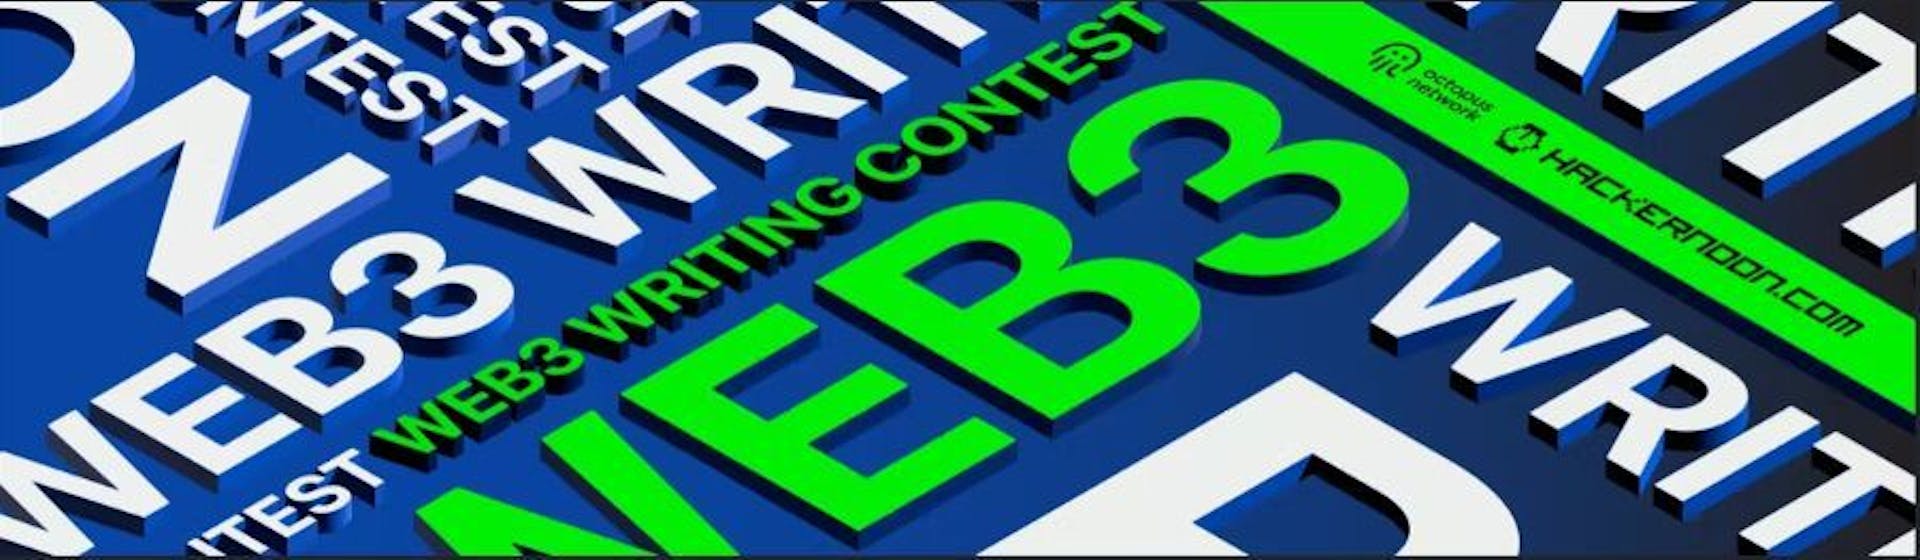 featured image - The Web3 Writing Contest 2022: 最終ラウンドの結果が発表されました!